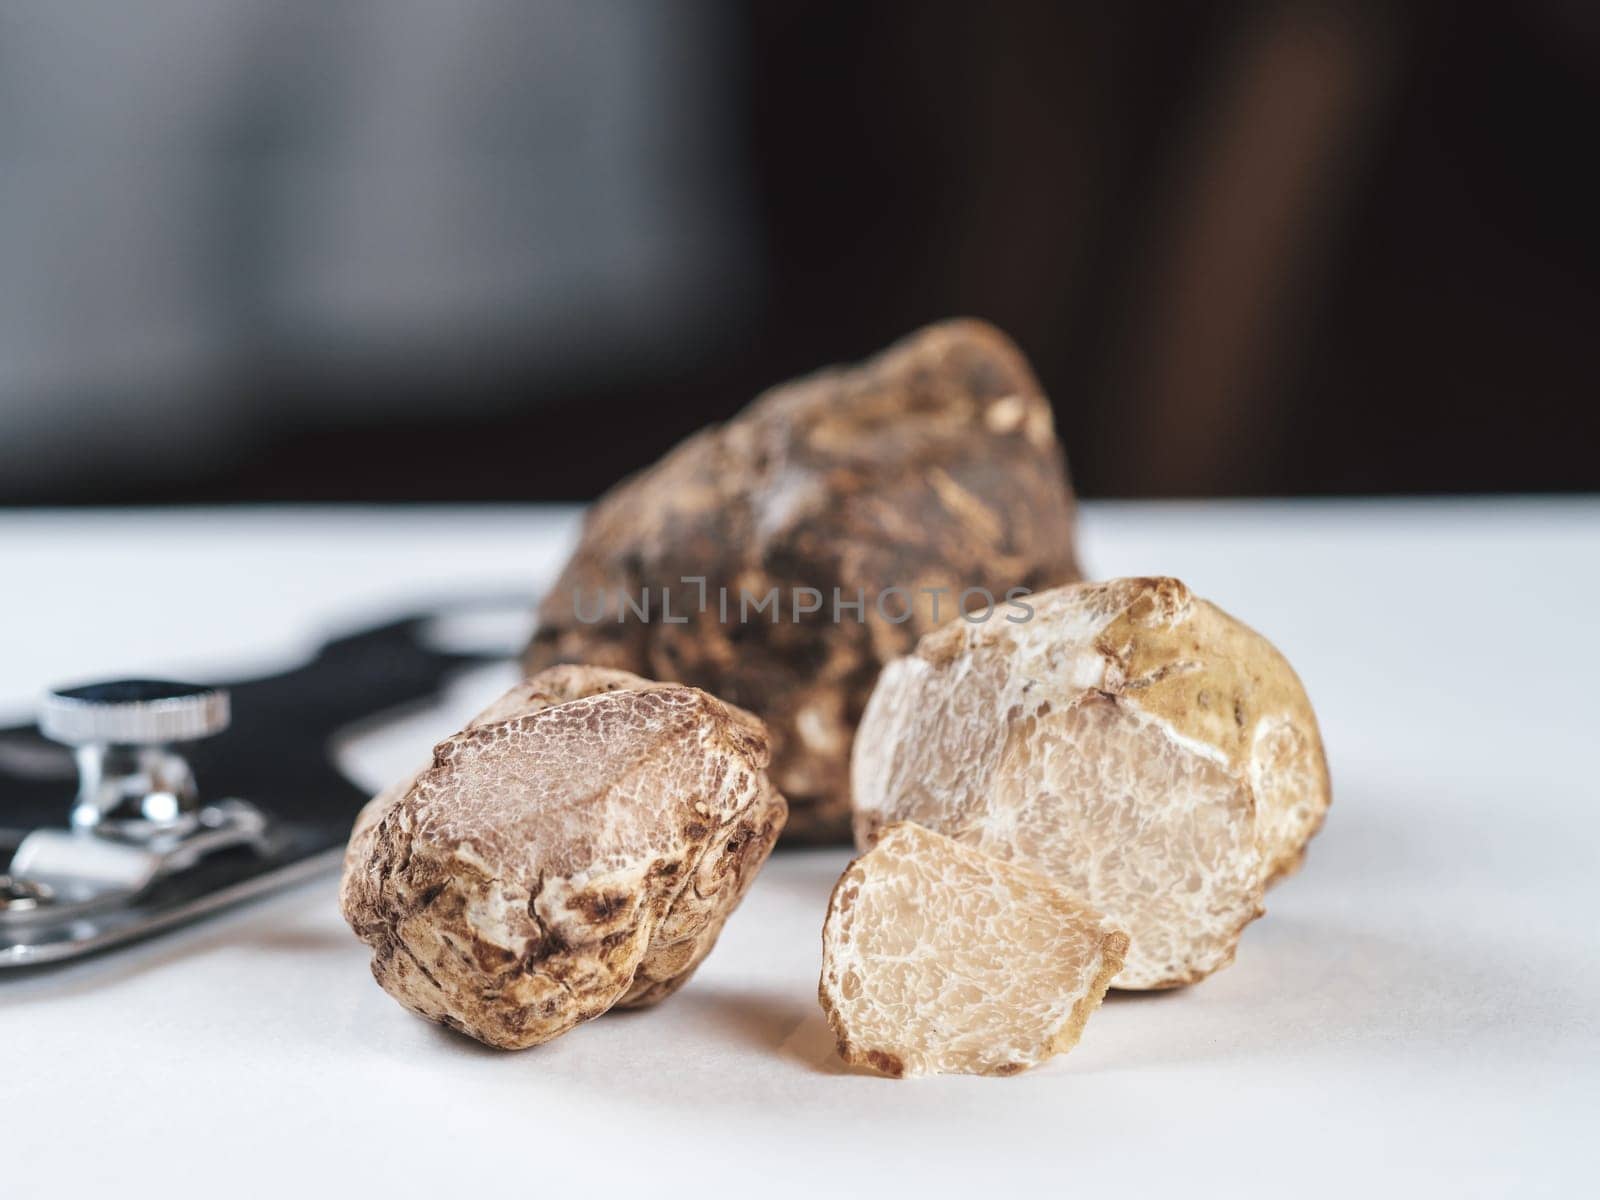 Black truffles gourmet mushrooms by fascinadora